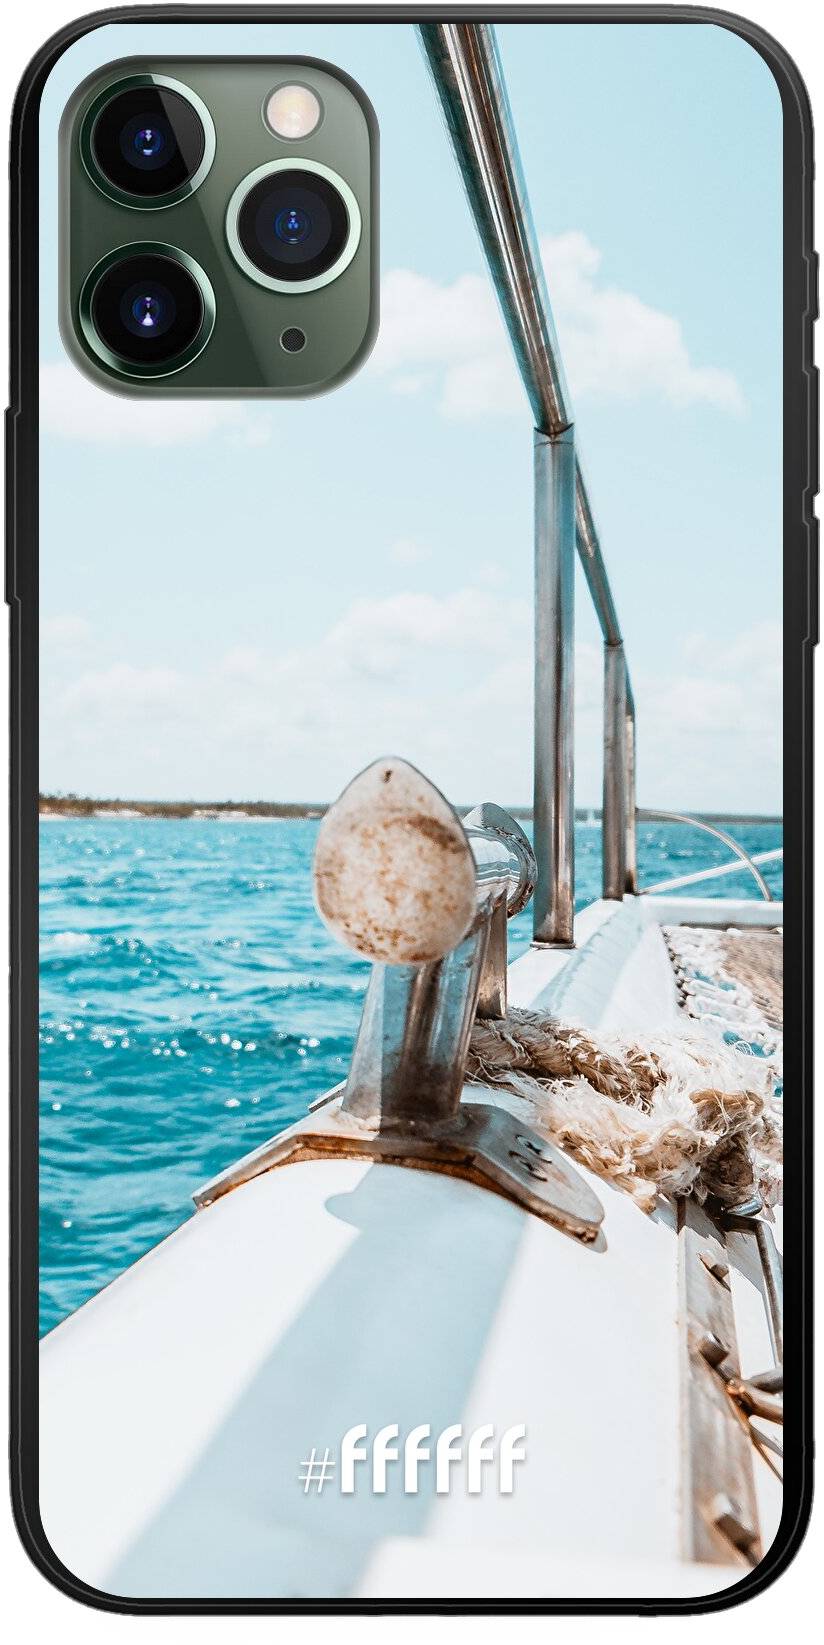 Sailing iPhone 11 Pro